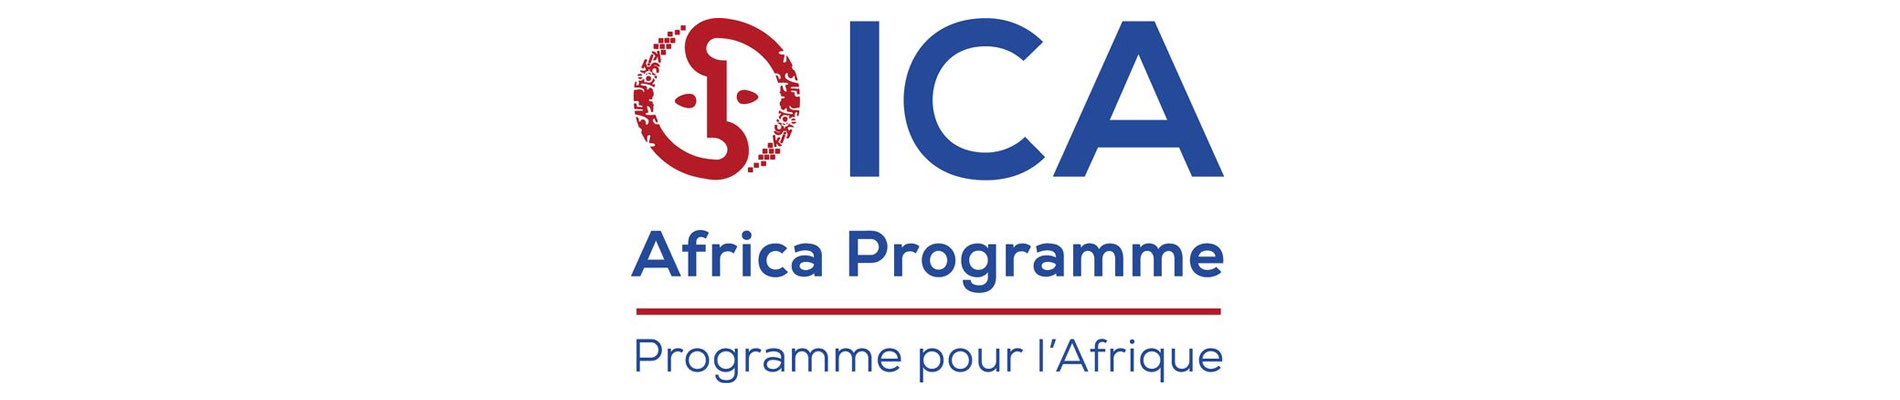 banner_africa_programme_1900x400